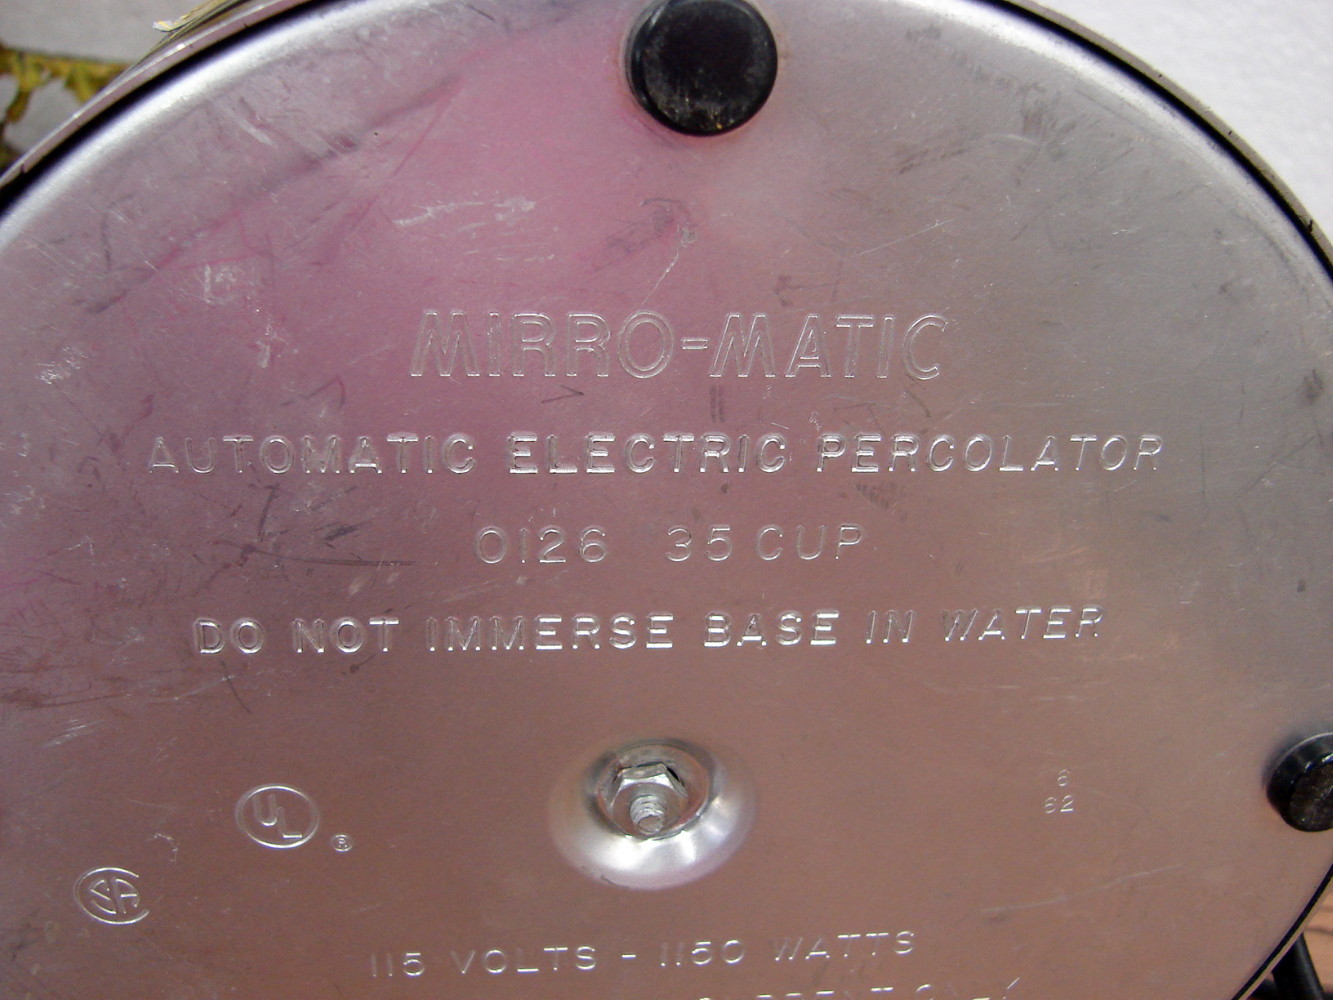 Vintage MIRRO-MATIC 10-35 Cup Automatic Electric Coffee Percolator Large  Potluck -  Log Cabin Decor